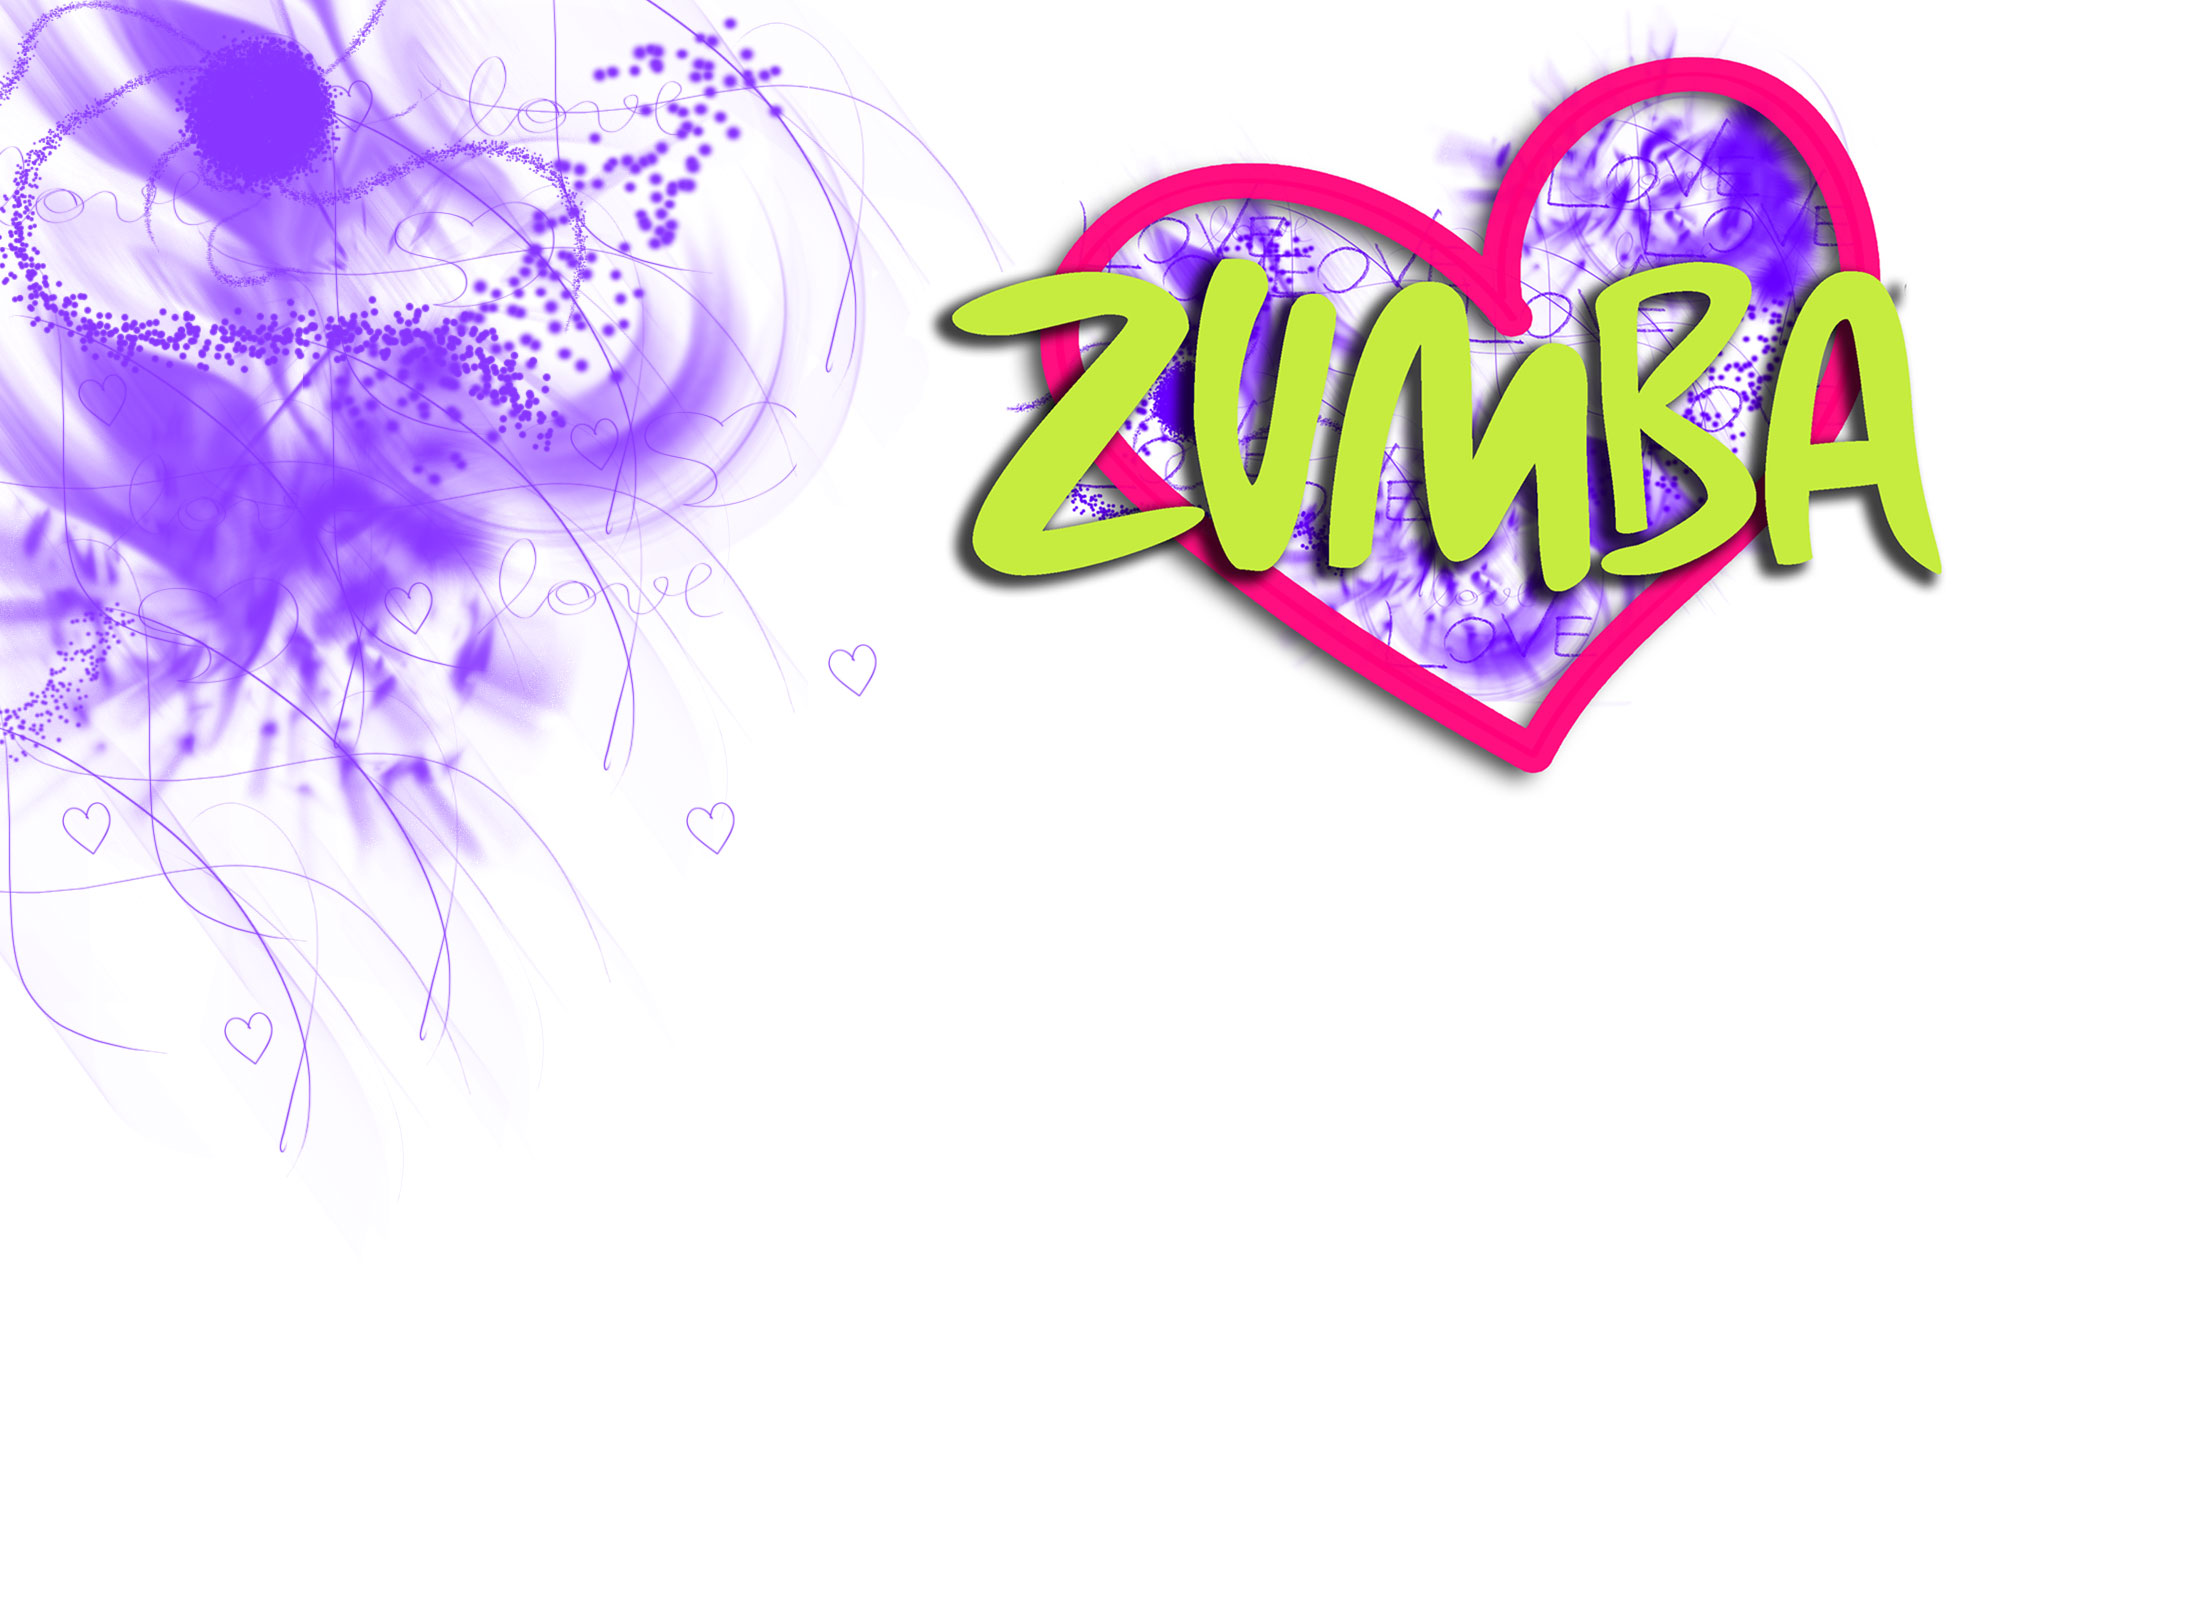 Zumba Logo Clip Art Pictures Image Photos Wallpaper Jpg